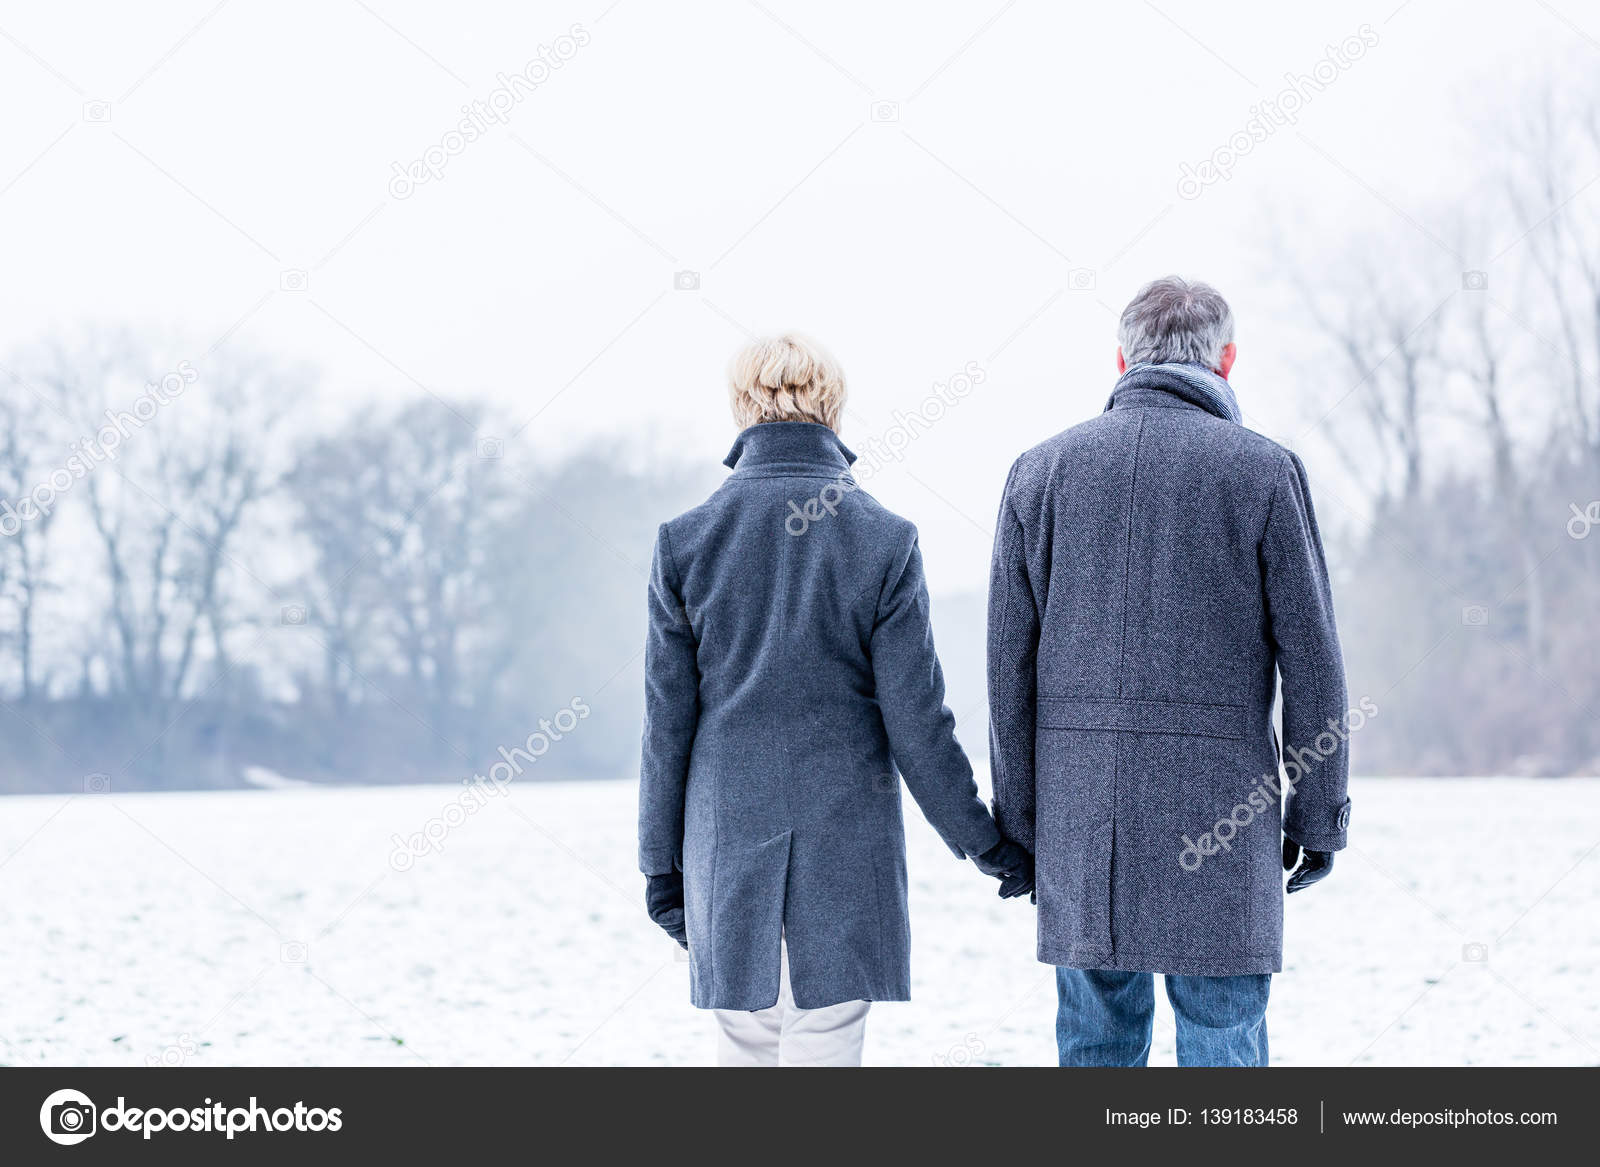 depositphotos_139183458-stock-photo-senior-couple-having-walk.jpg